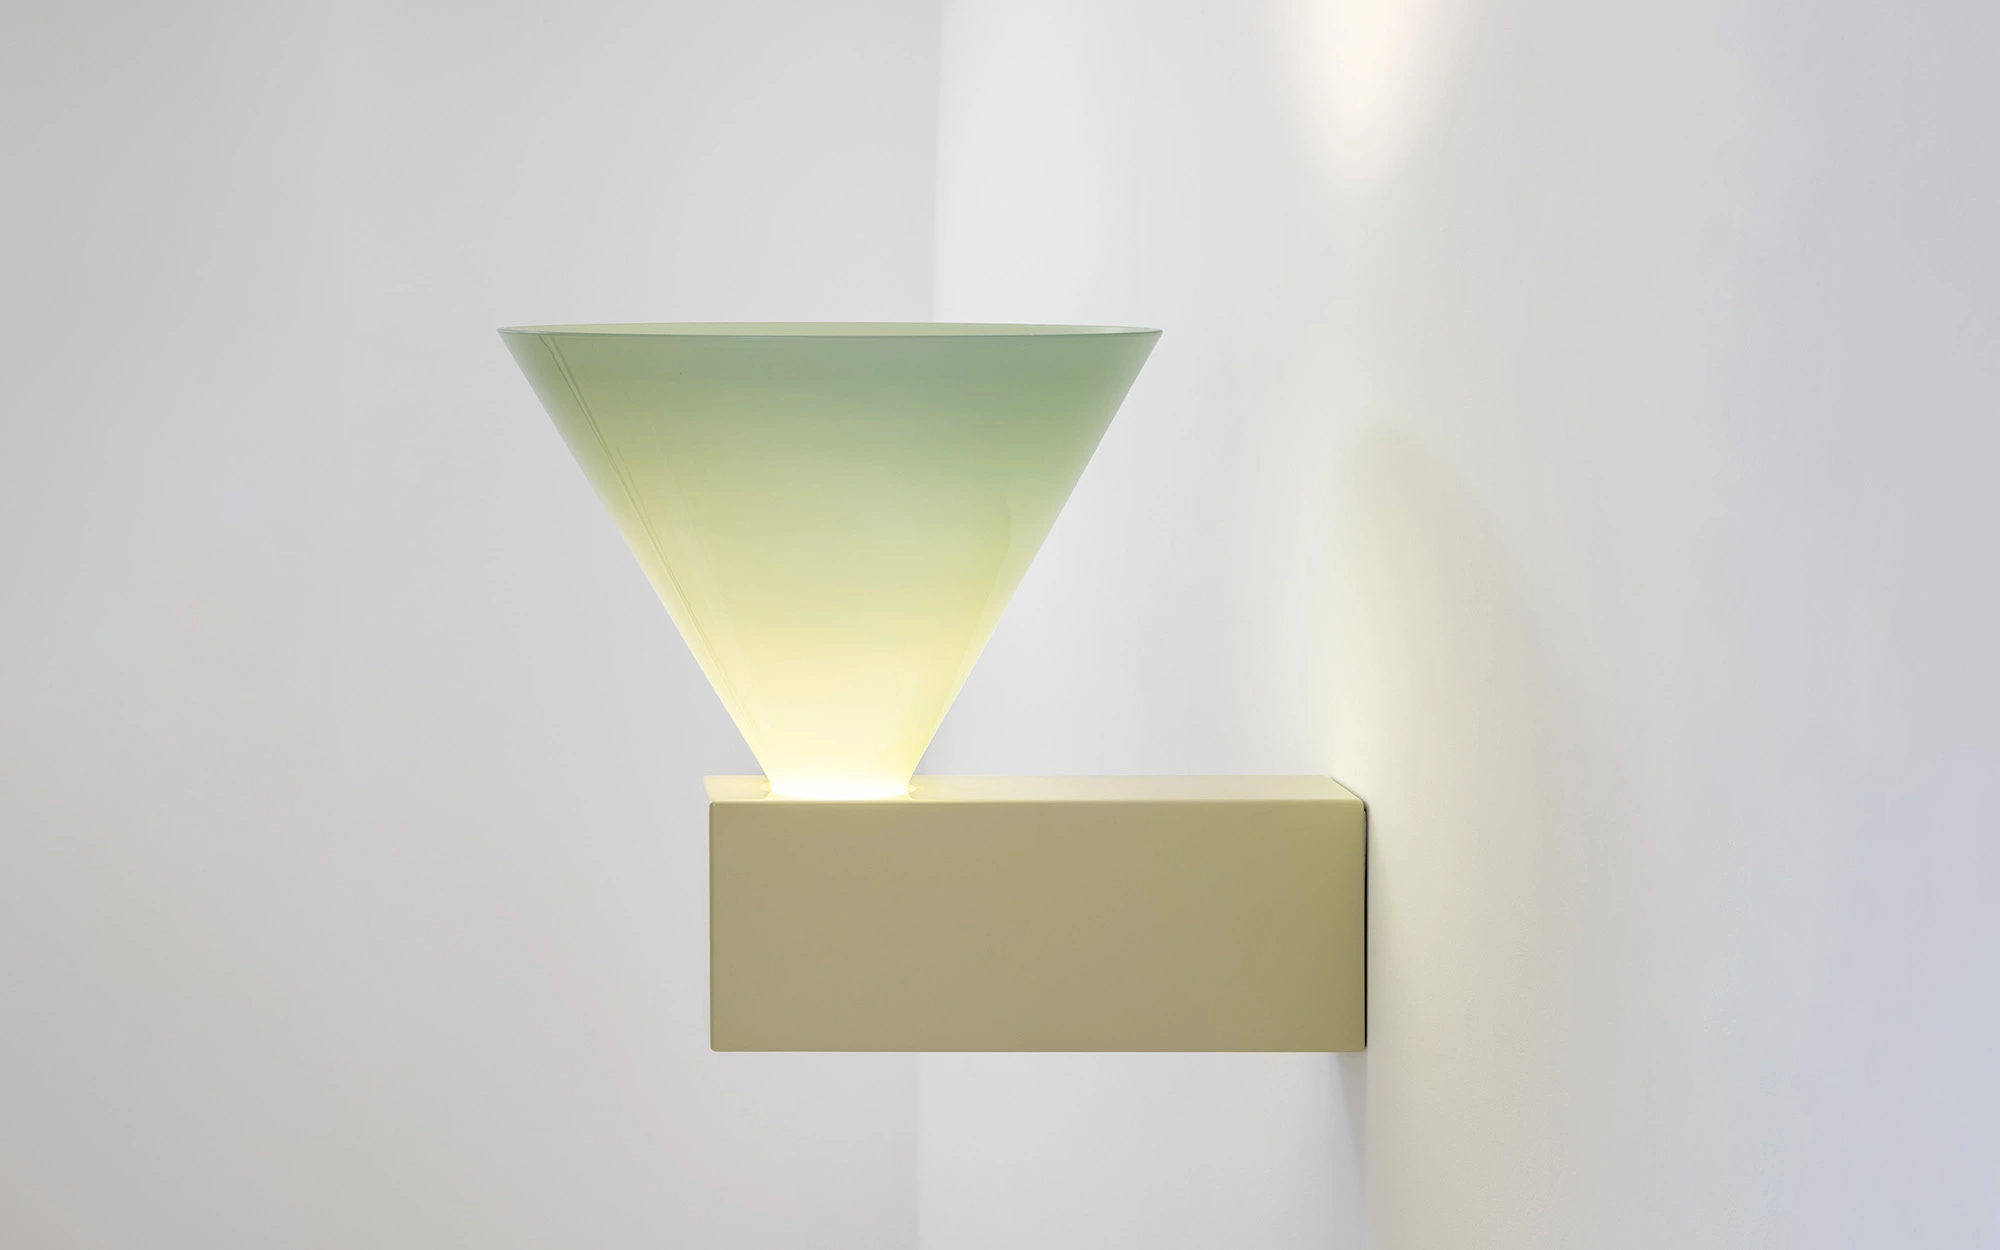 Signal W MONOCHROMATIC - Edward Barber & Jay Osgerby - Pendant light - Galerie kreo